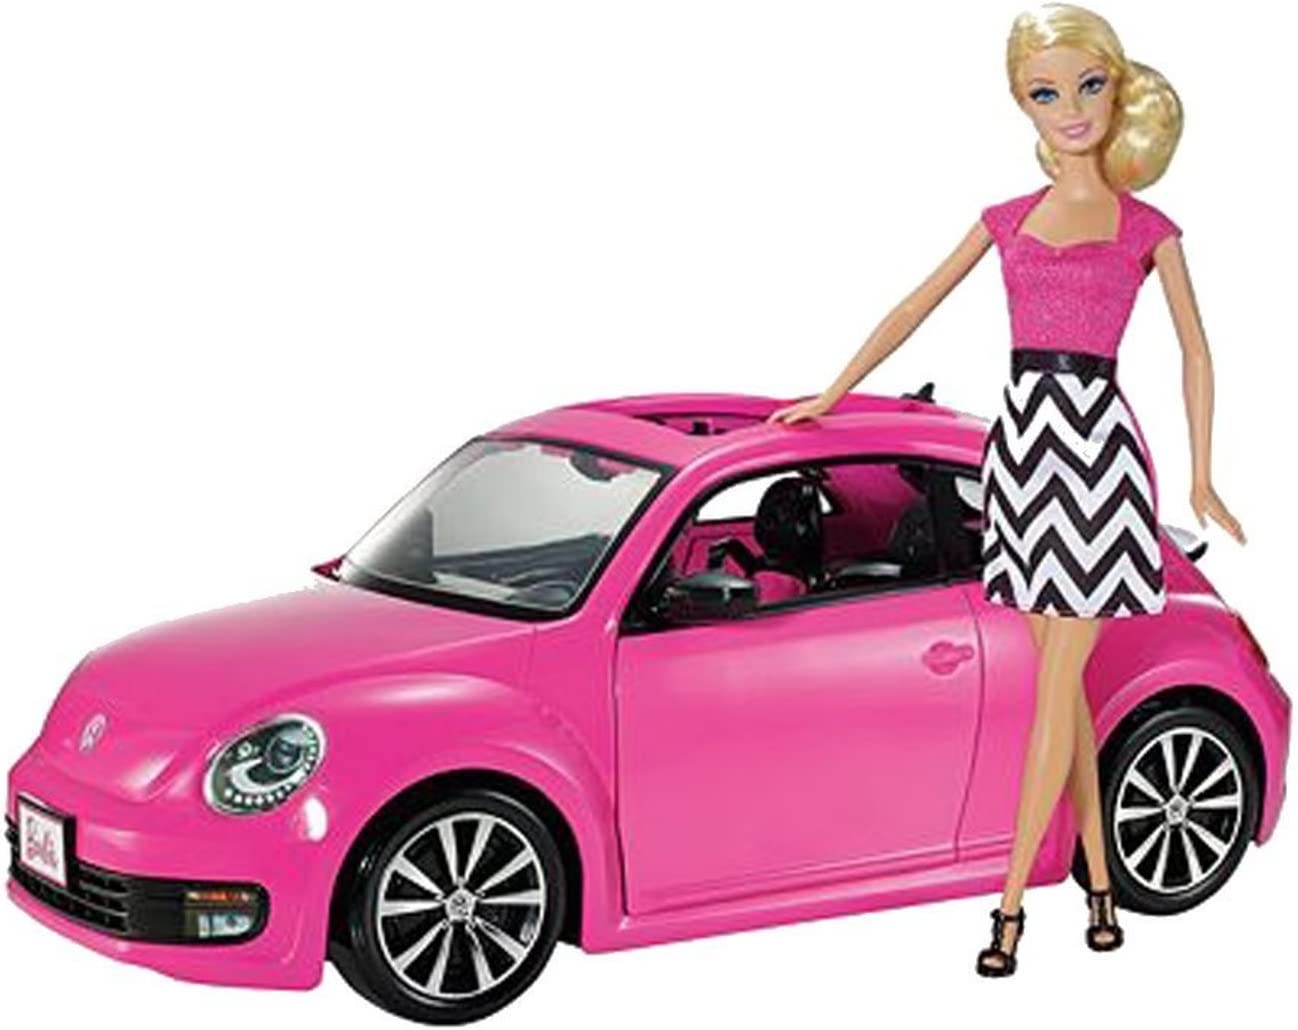 Autos icónicos de la muñeca Barbie